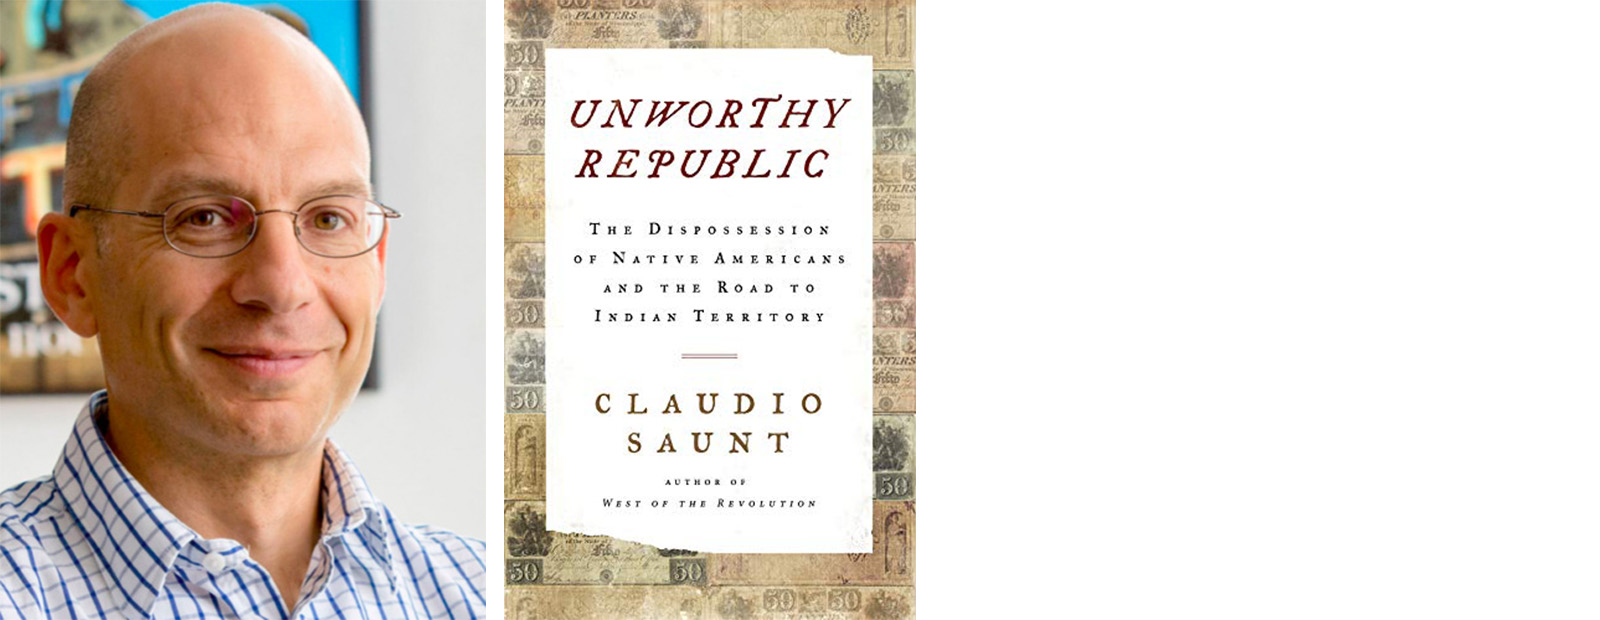 Claudio Saunt and book cover